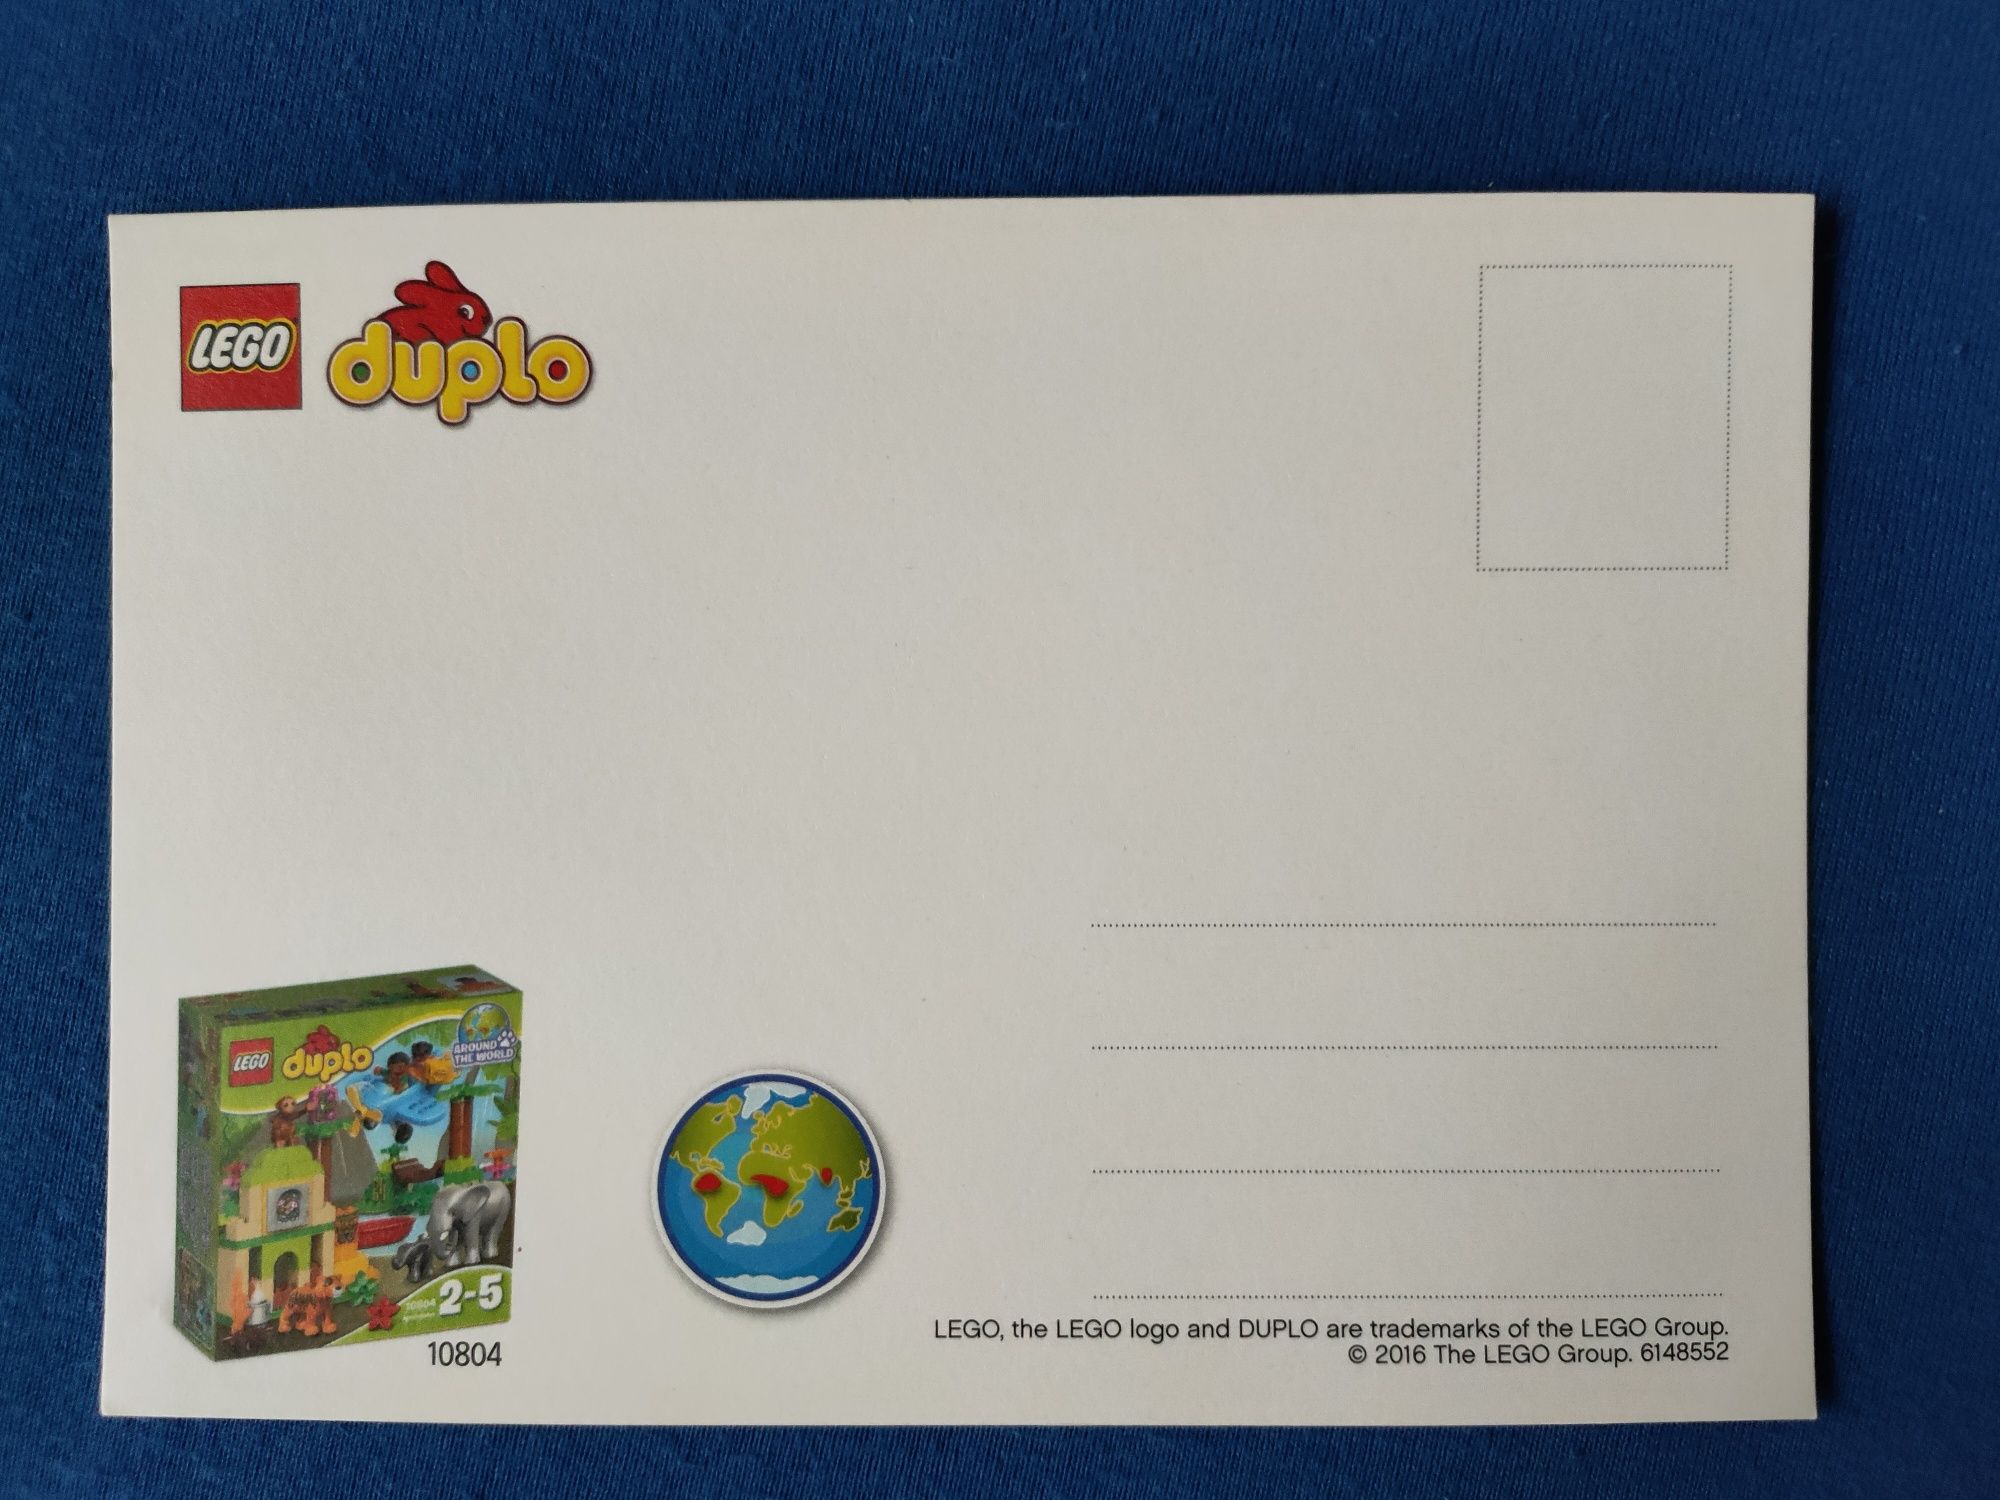 Kartki pocztowe LEGO Duplo